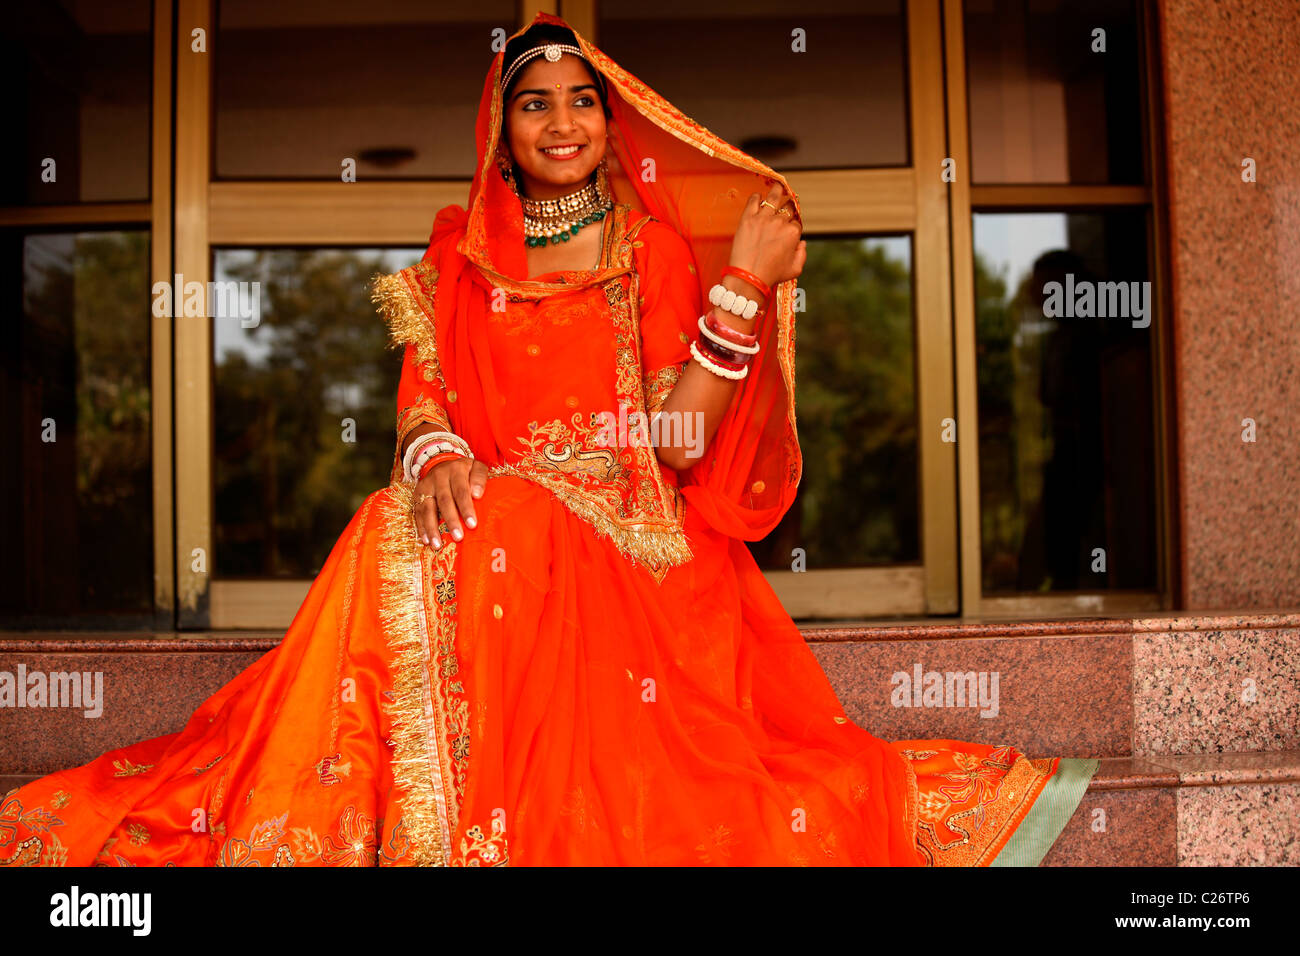 Rajasthani Dress For Girl - Buy Now | Kids Fancy Dress